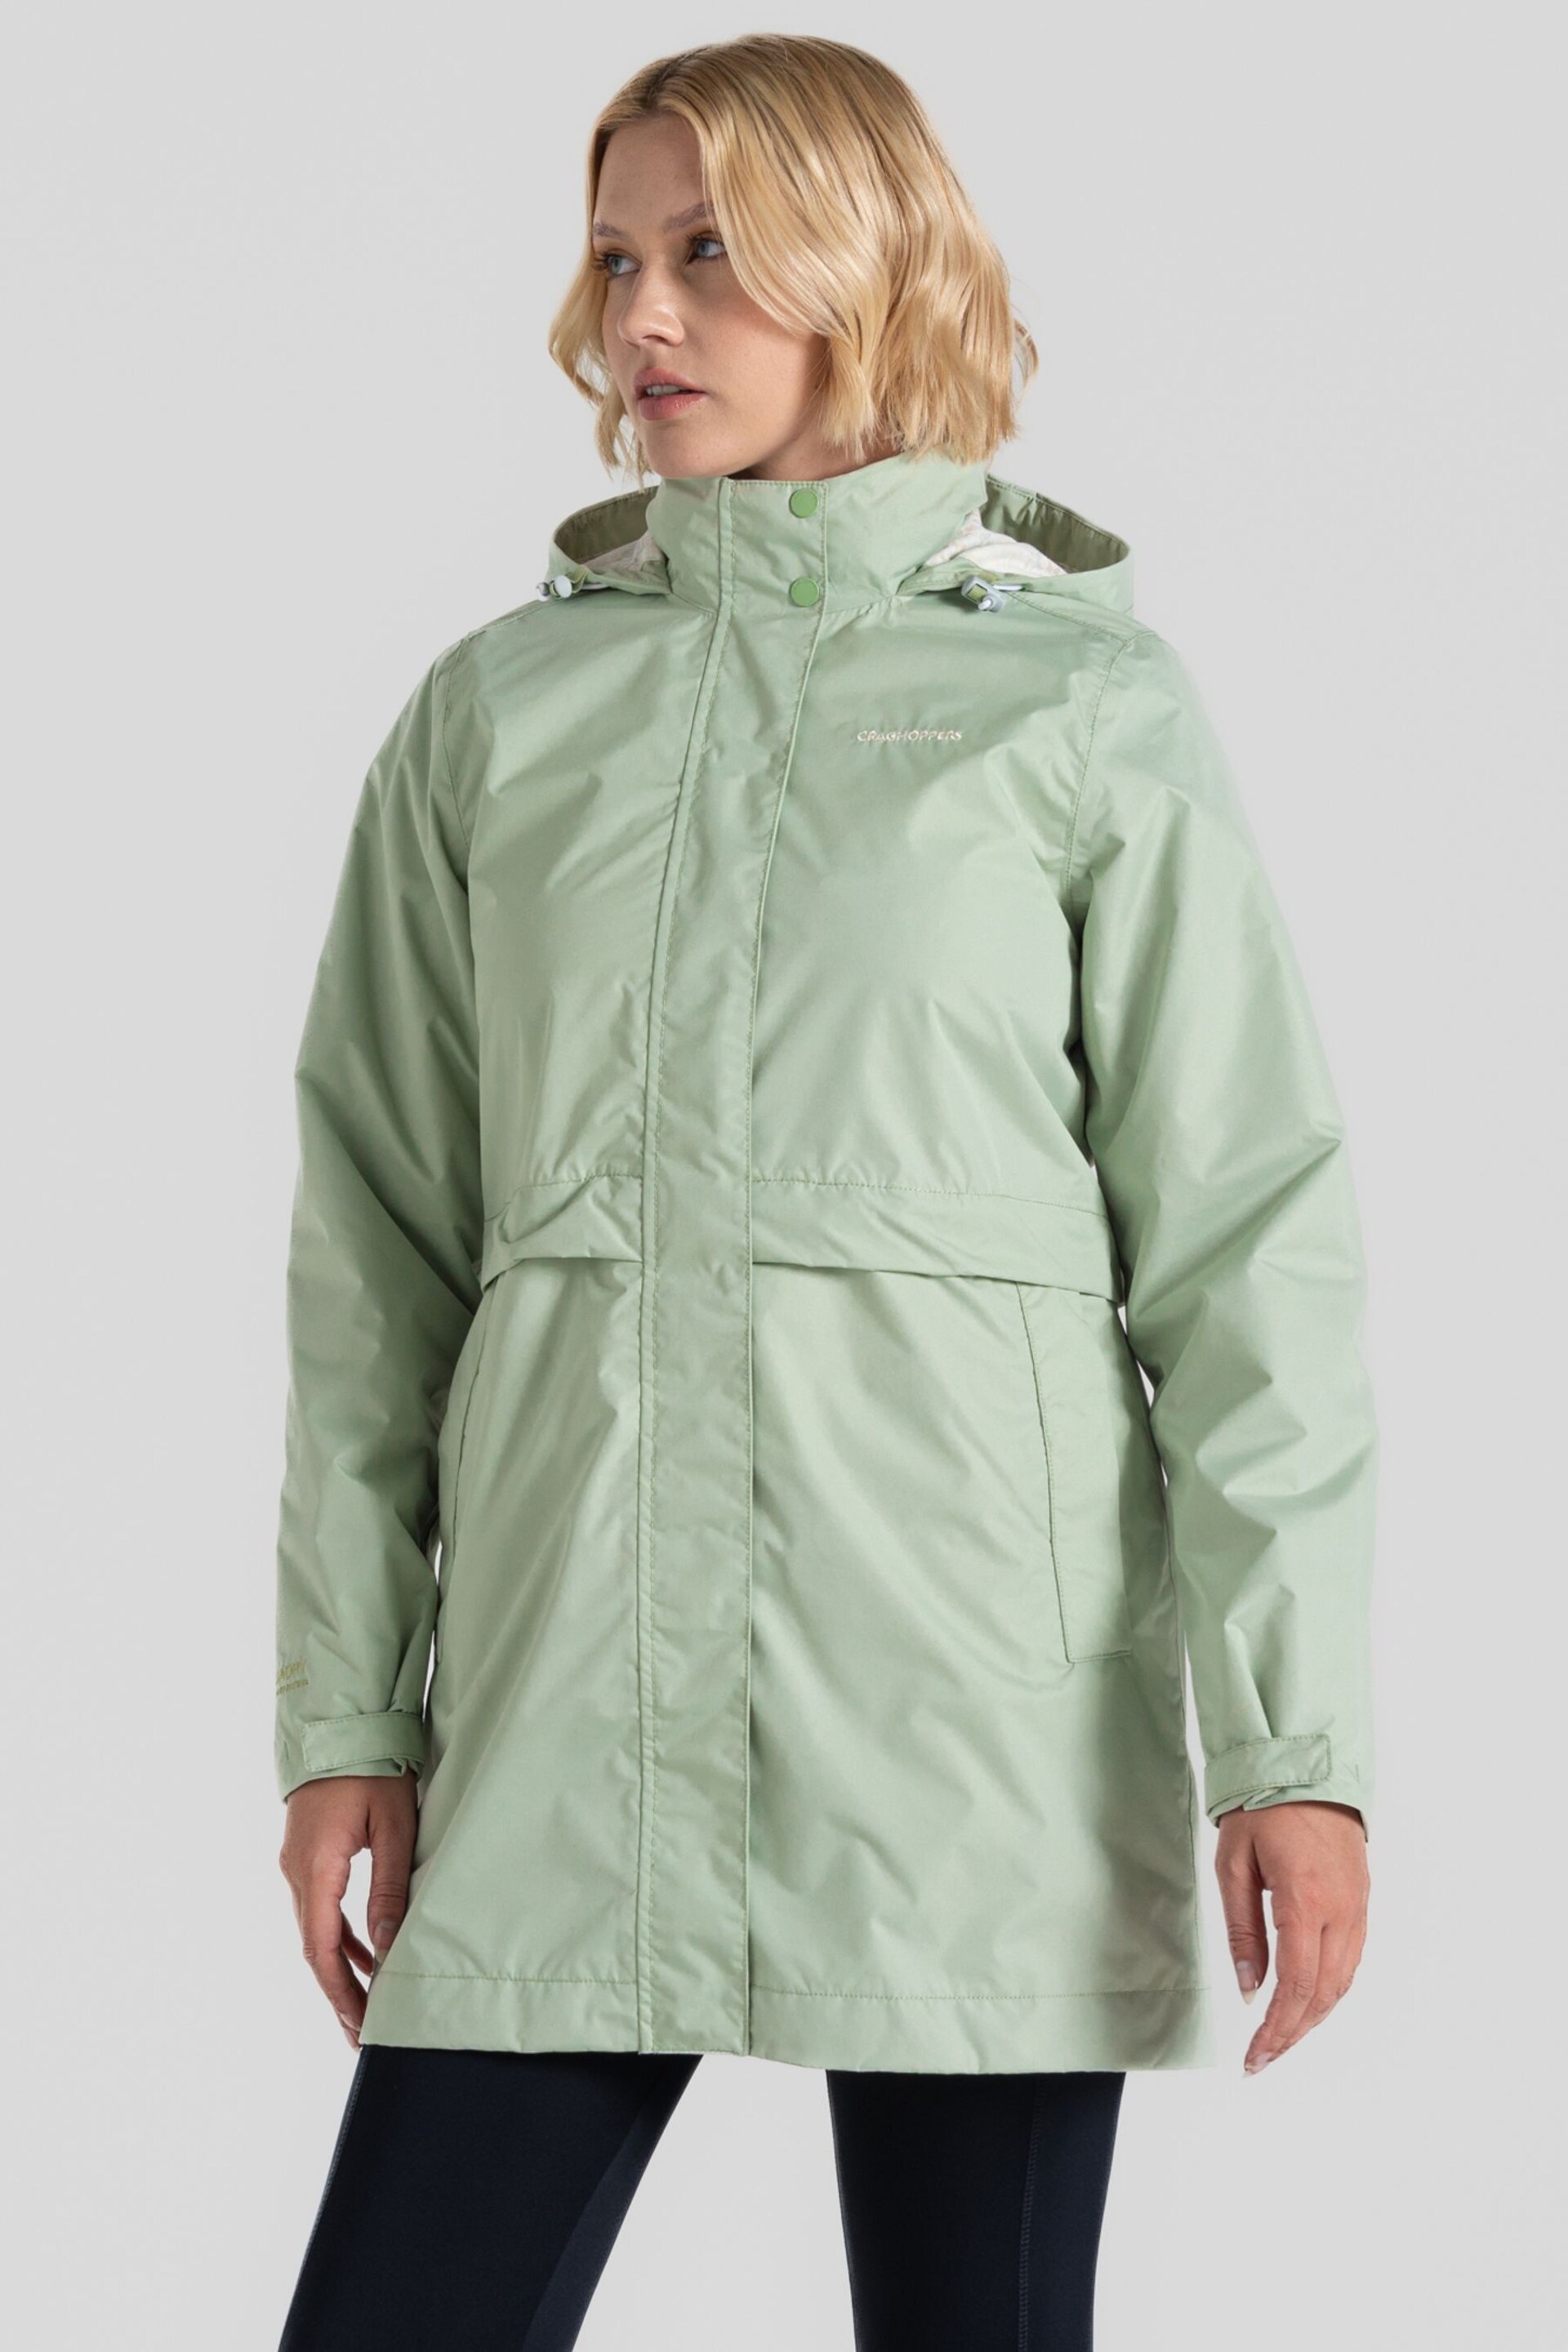 Craghoppers Green Ana Waterproof Jacket - Image 1 of 7